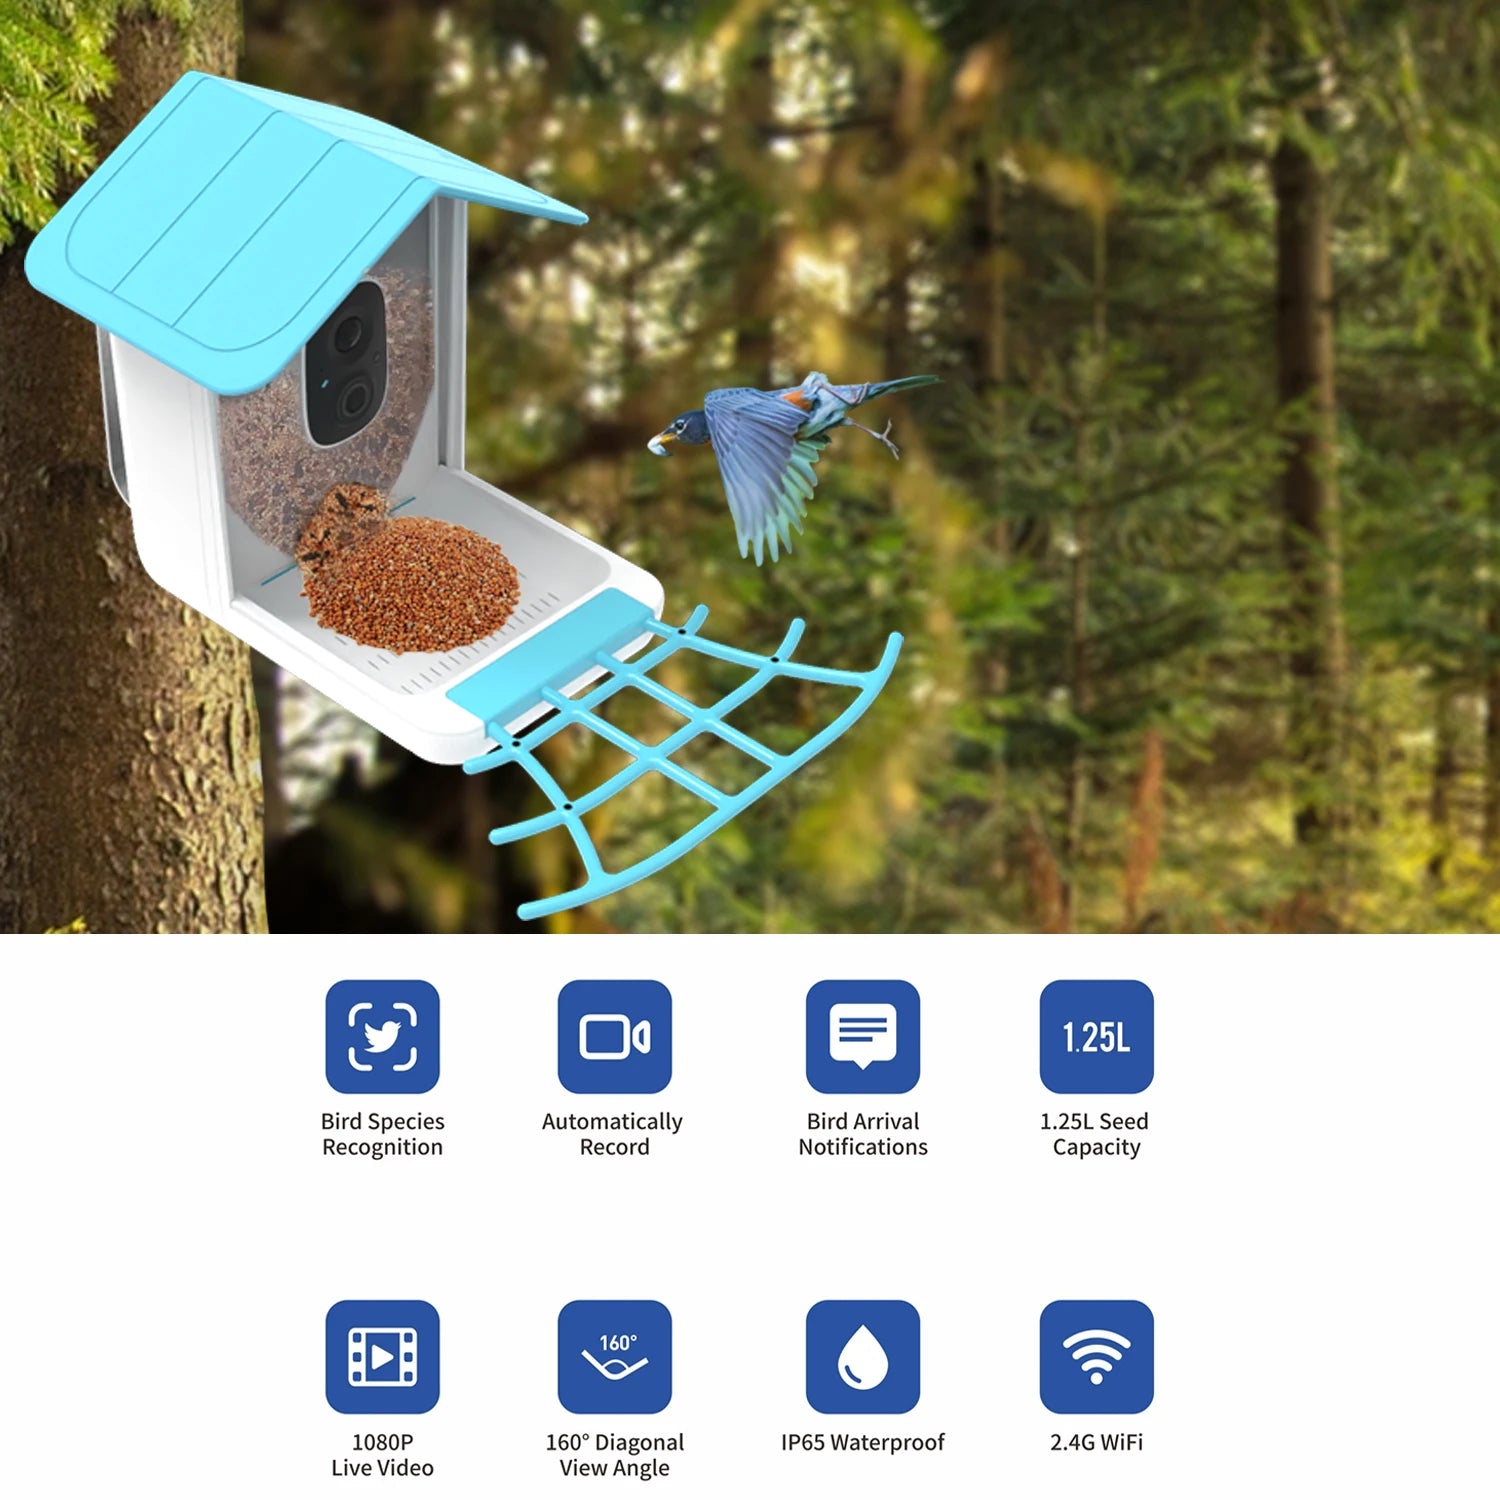 Solar charging Smart outdoor bird feeder with camera - IHavePaws